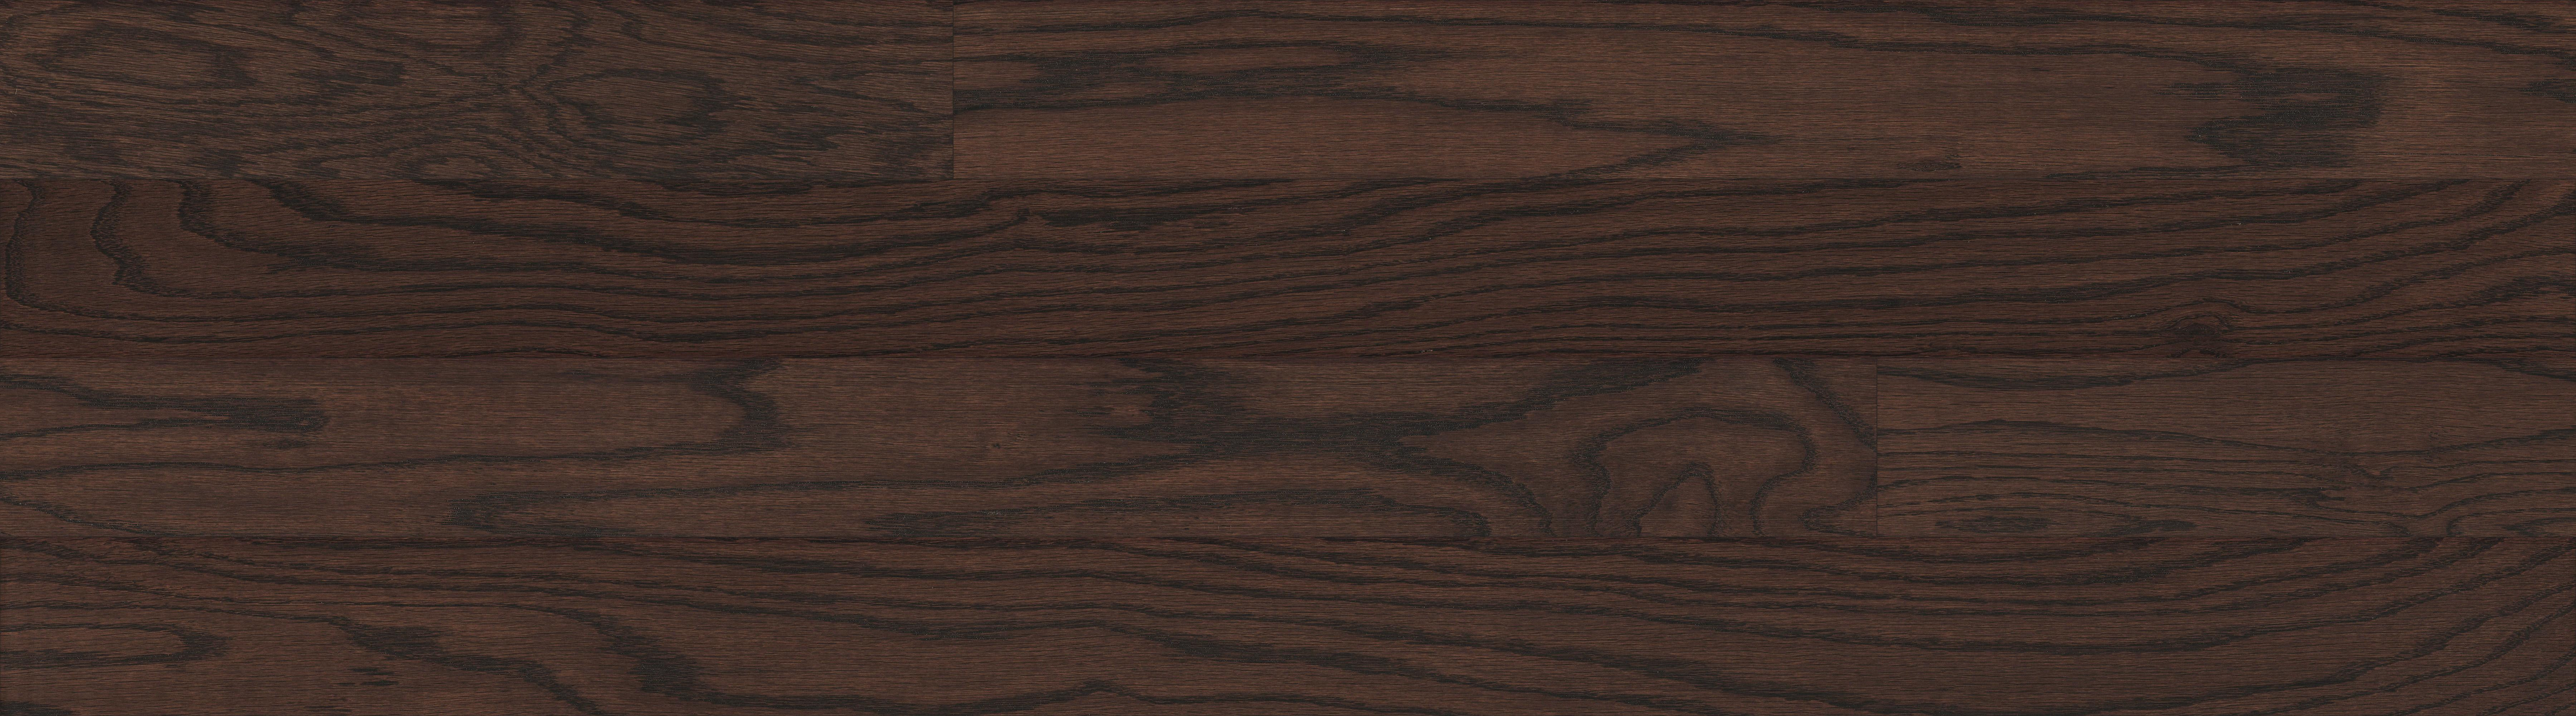 Bruce Turlington Engineered Hardwood Flooring Of Mullican Ridgecrest Oak Burnt Umber 1 2 Thick 5 Wide Engineered Throughout Mullican Ridgecrest Oak Burnt Umber 1 2 Thick 5 Wide Engineered Hardwood Flooring